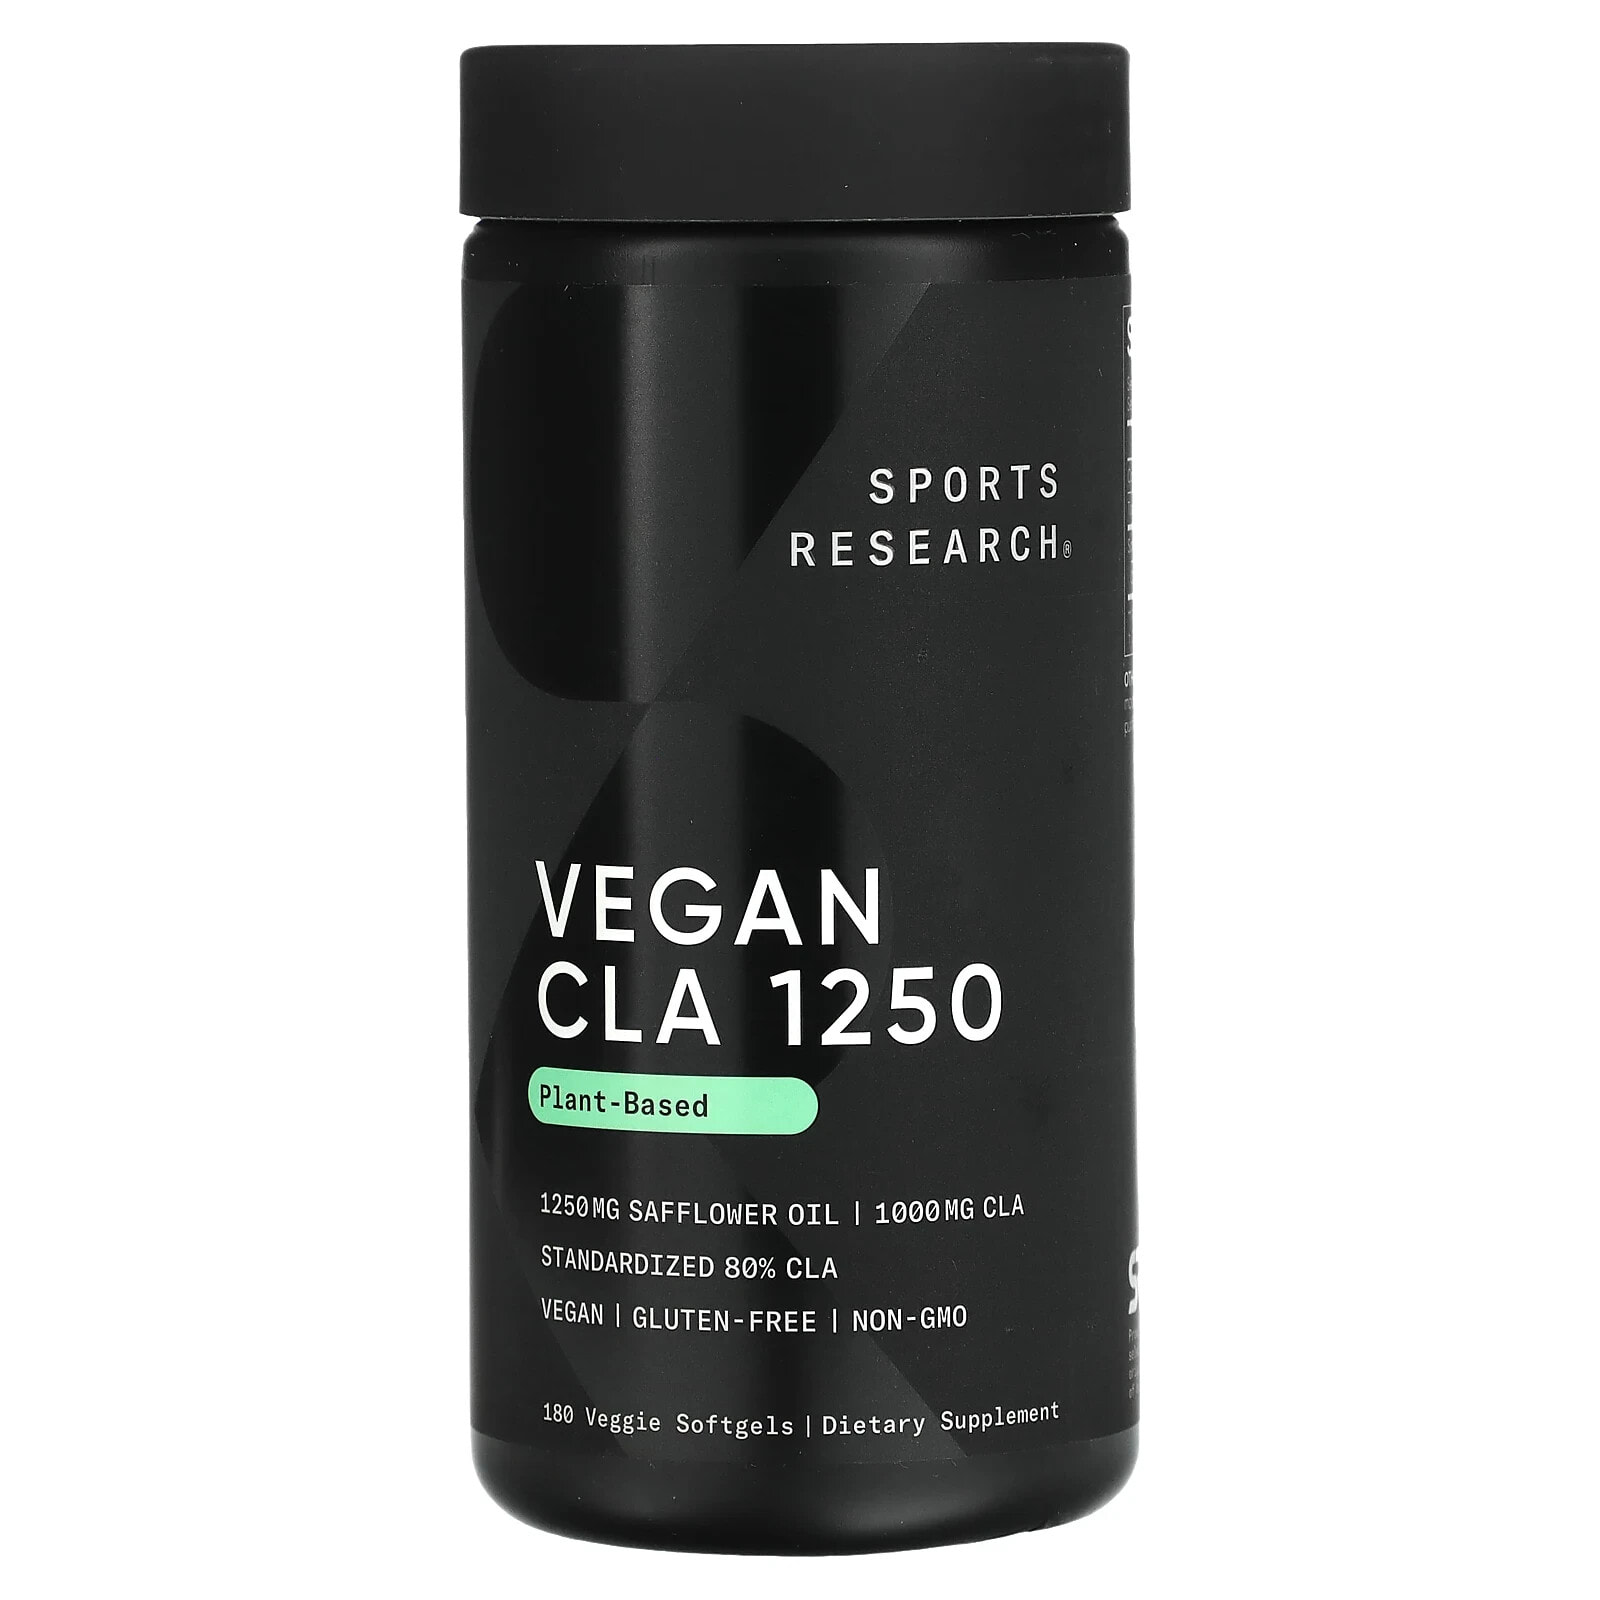 Vegan CLA 1250, Plant Based, 1,250 mg, 180 Veggie Softgels